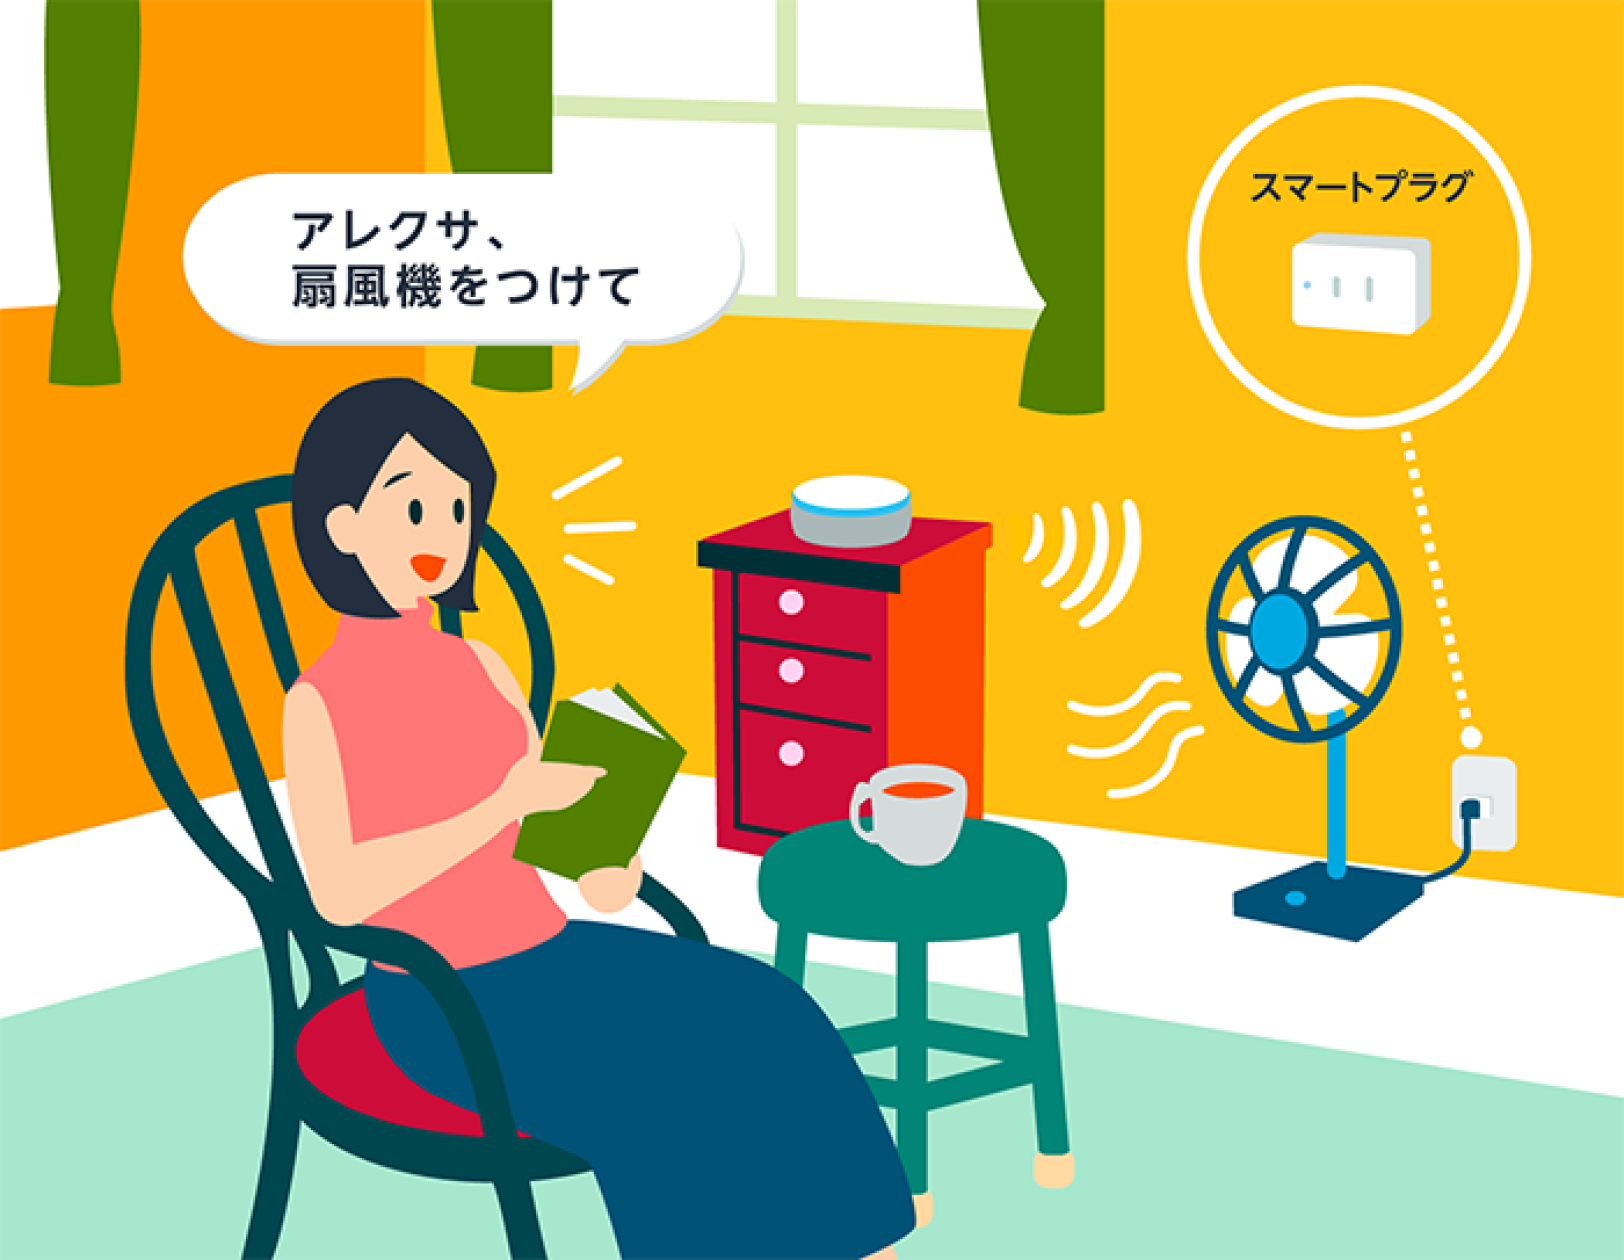 ●Amazonの《Smart Plug》で家電をスマート化しよう